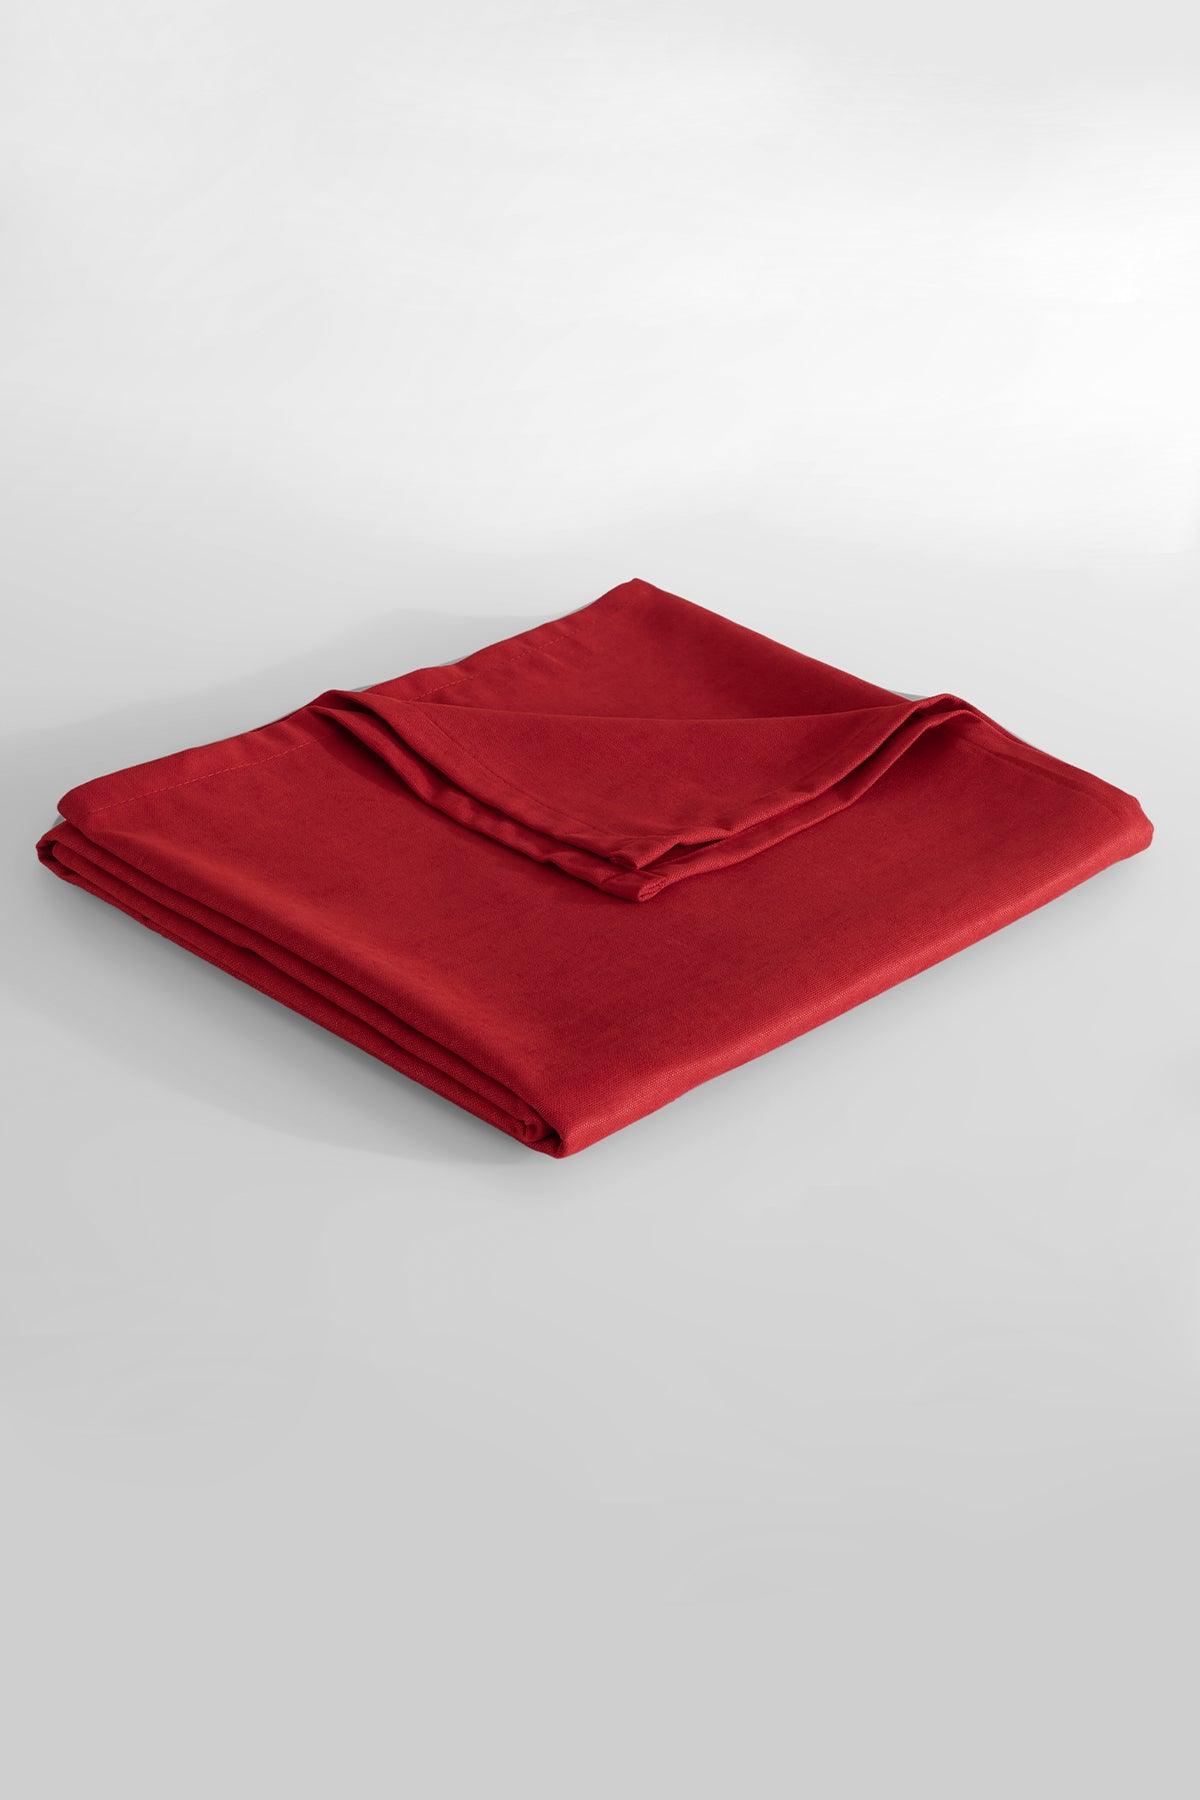 Masa Örtüsü Mat Kadife Kırmızı 140x230 cm - Elart Home